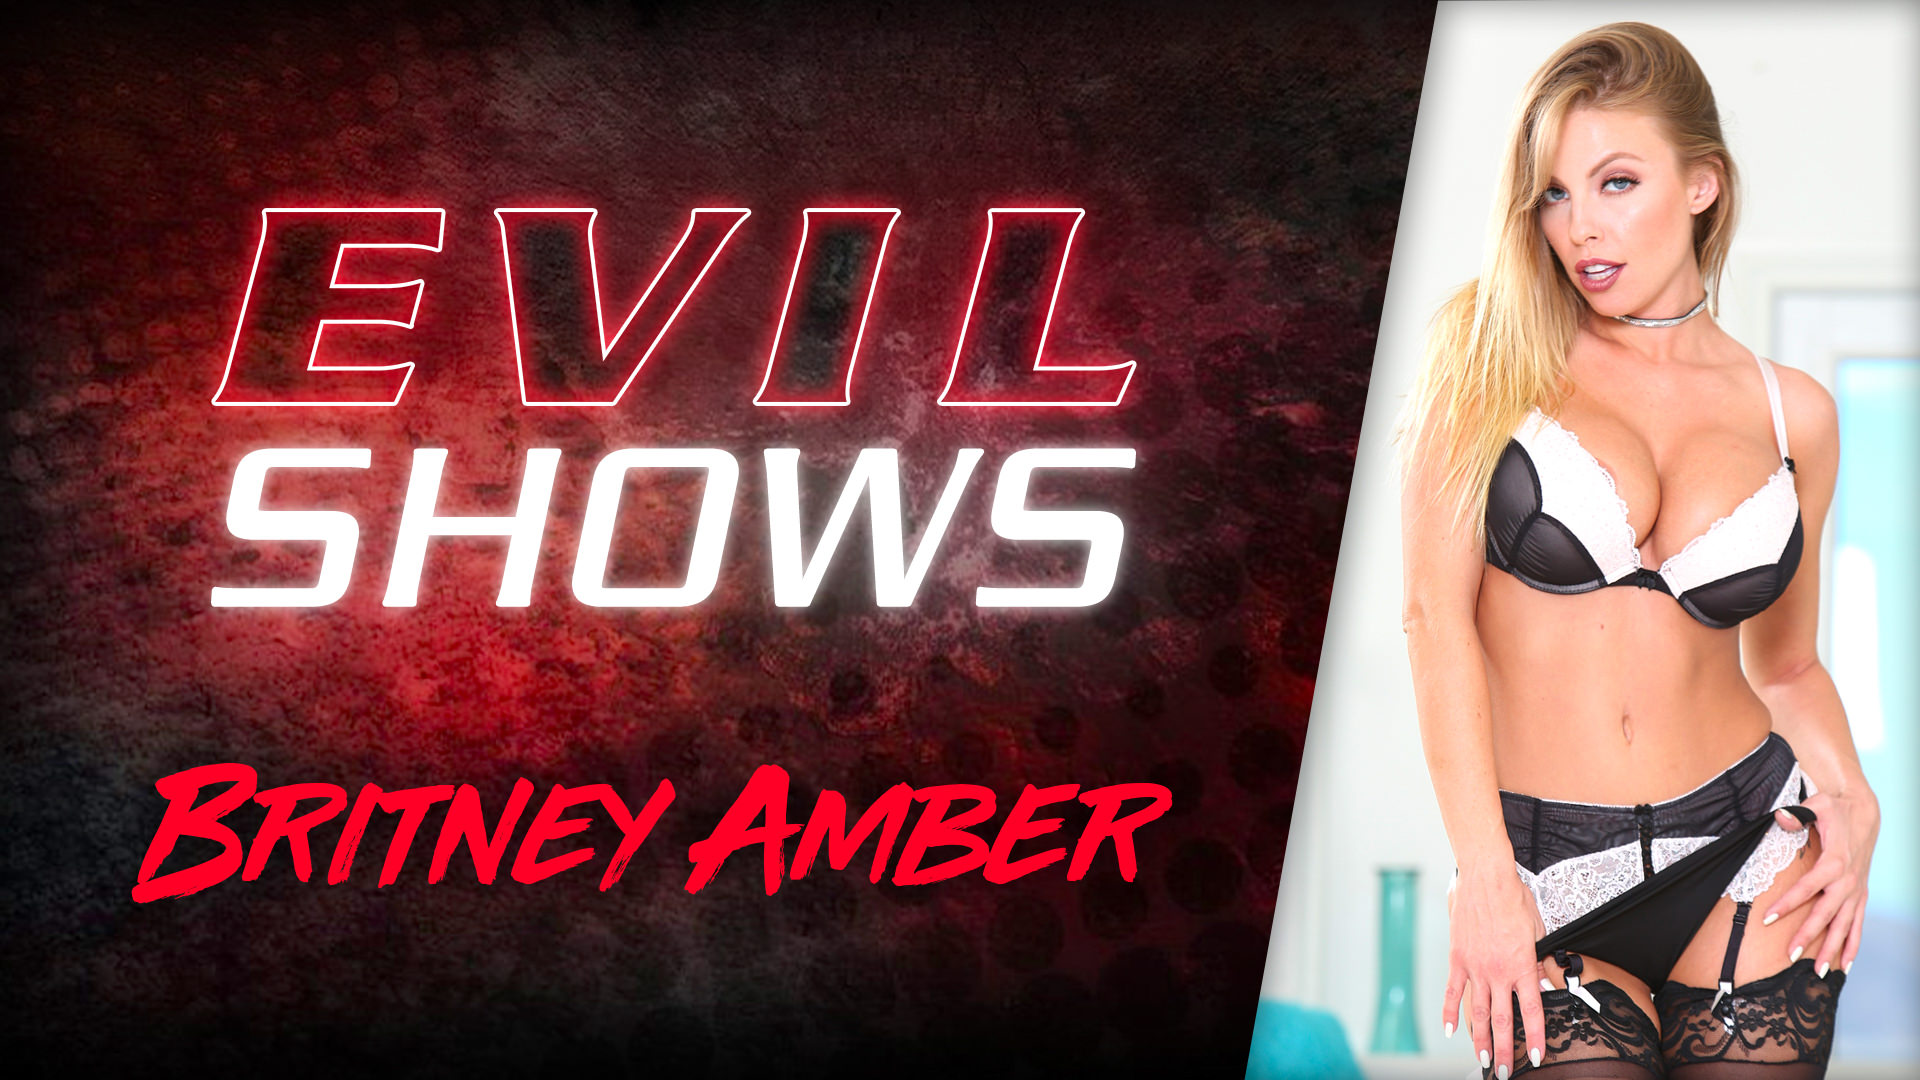 Evil shows britney amber britney amber Britney Amber loves